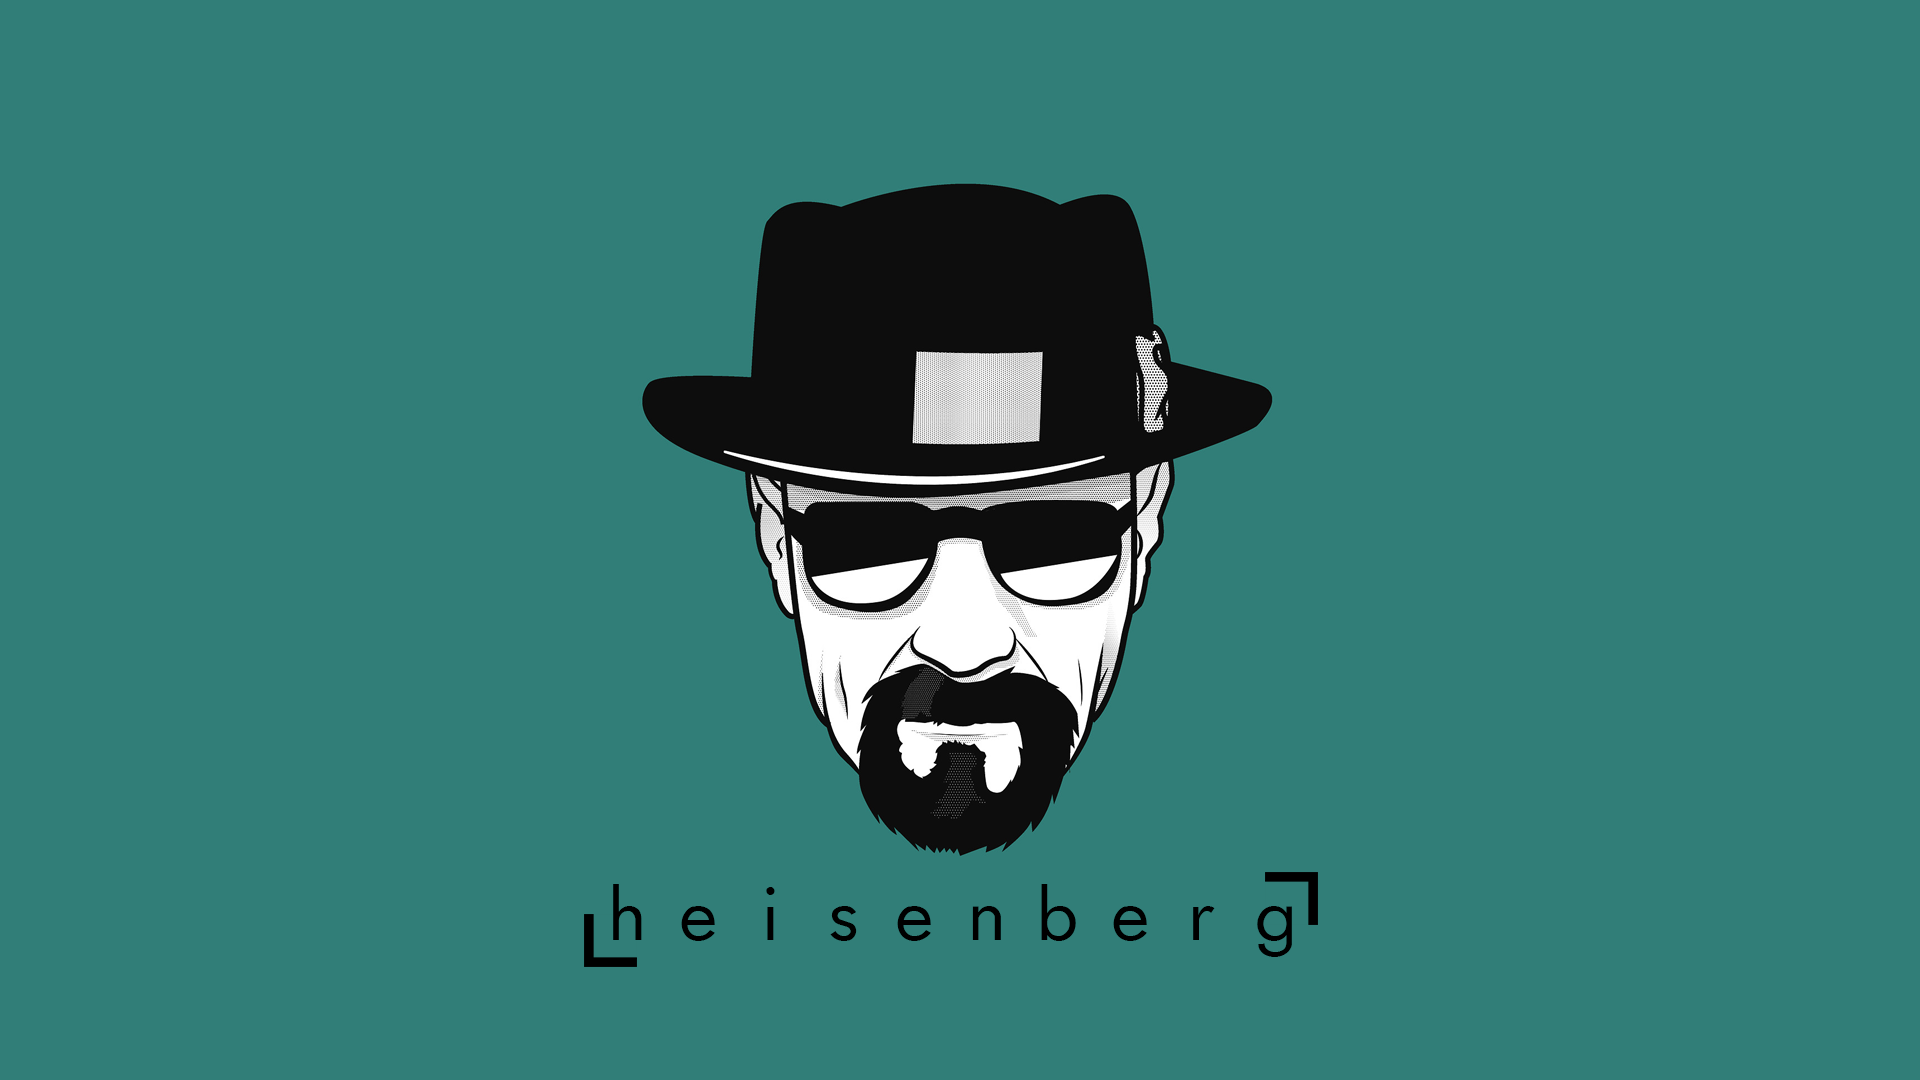 General 1920x1080 Breaking Bad sunglasses hat TV series beard Heisenberg green green background